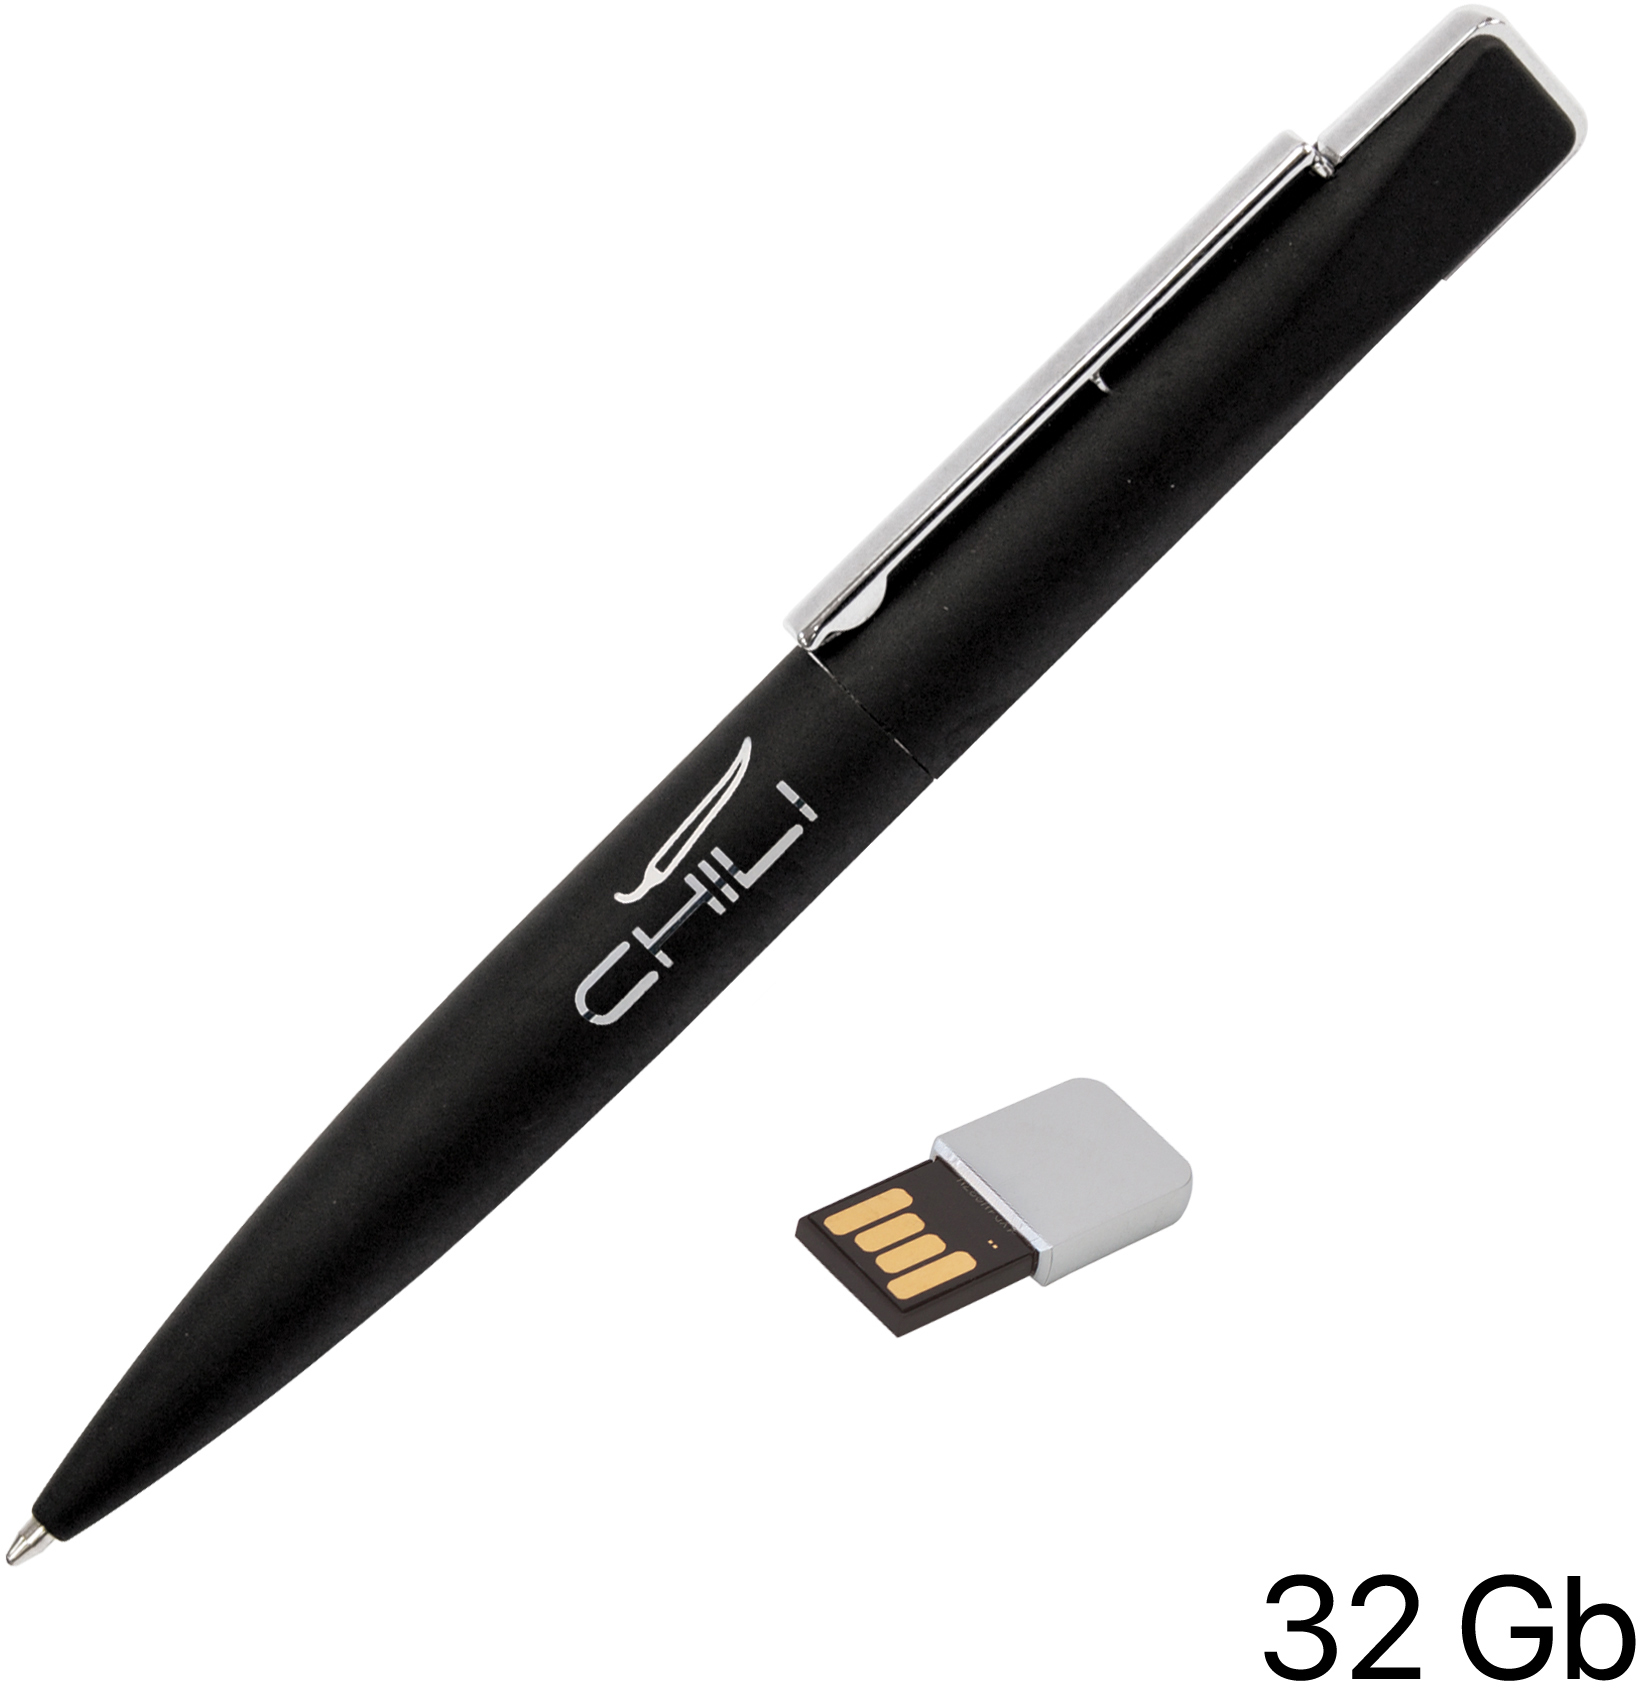 Артикул: E6828-3S/32Gb — Ручка шариковая "Callisto" с флеш-картой 32Gb, покрытие soft touch